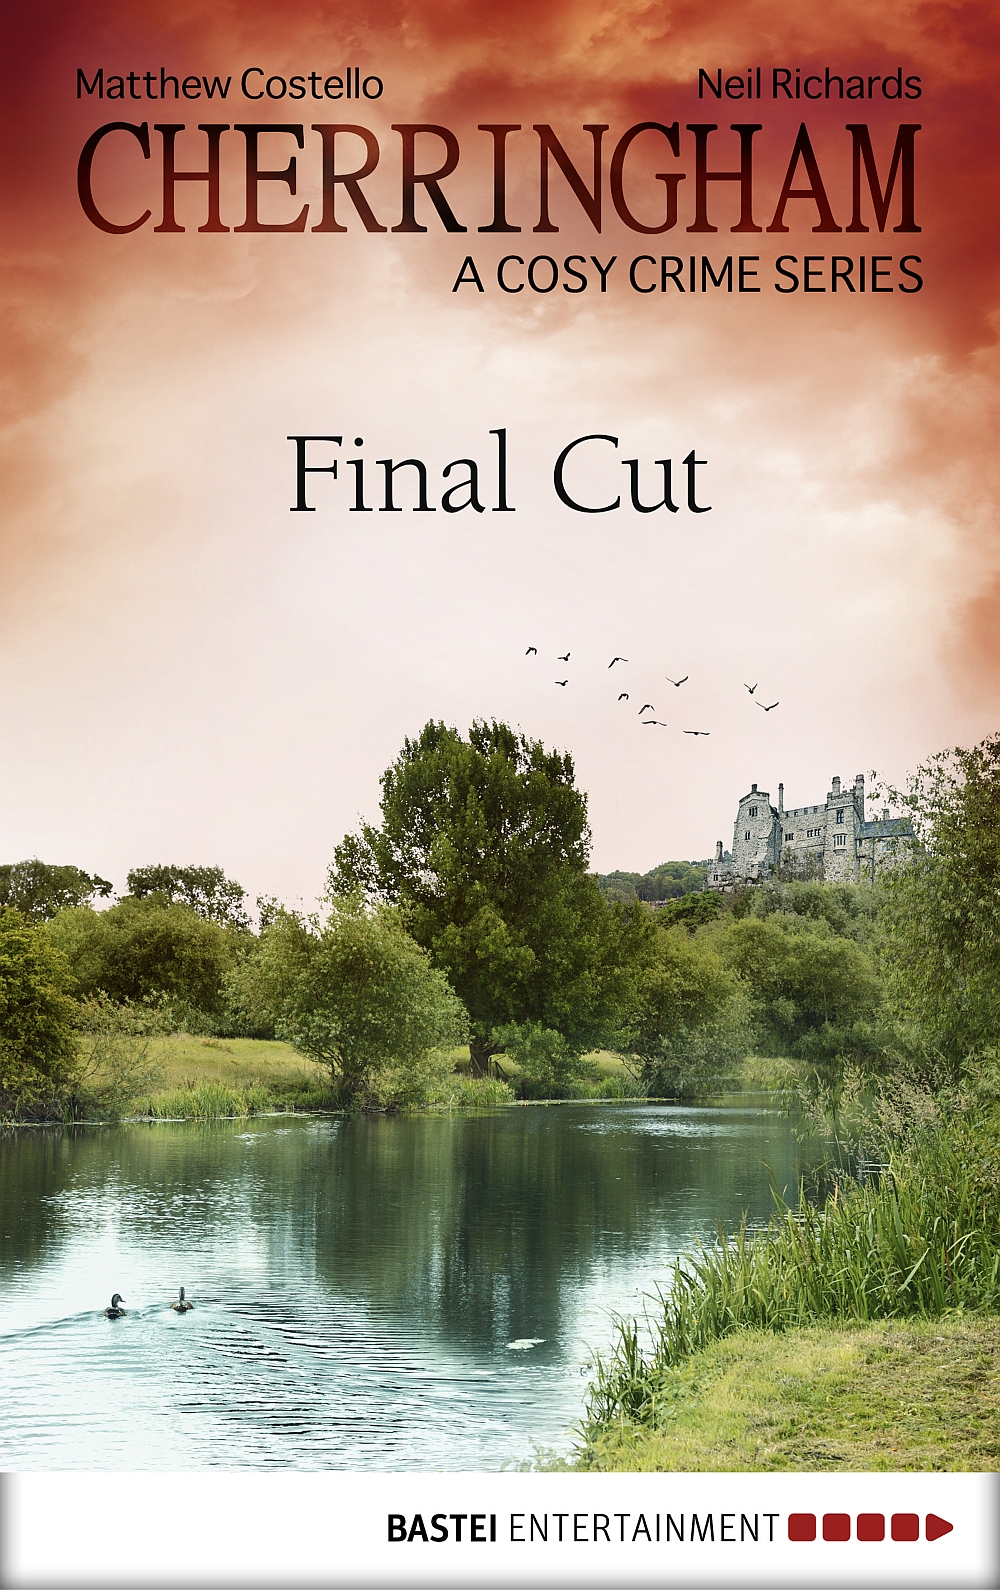 Cherringham--Final Cut (2015) by Neil Richards